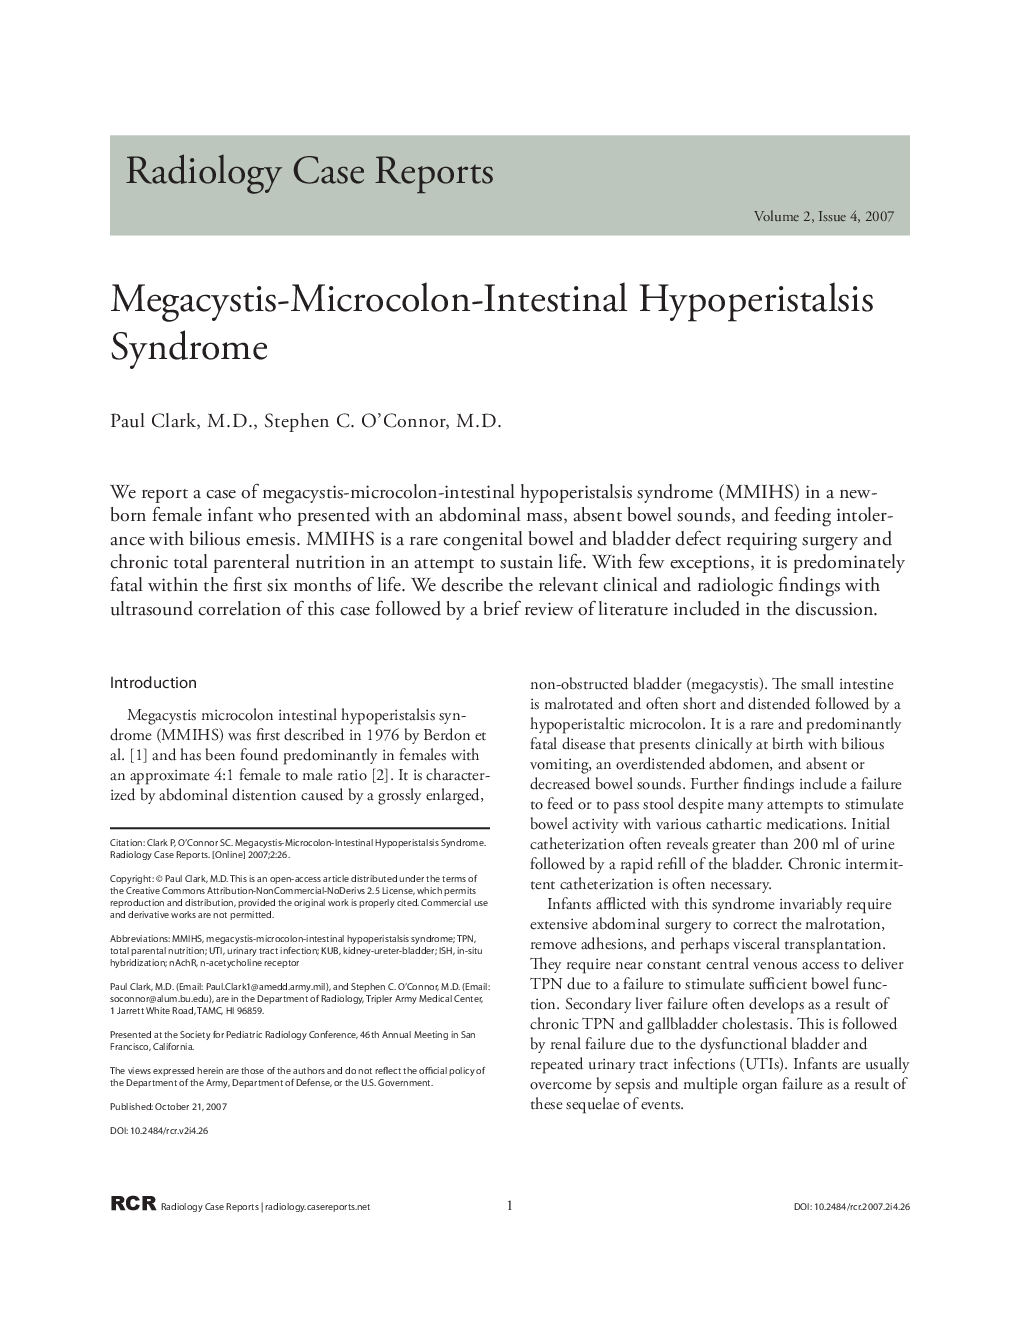 Megacystis-Microcolon-Intestinal Hypoperistalsis Syndrome